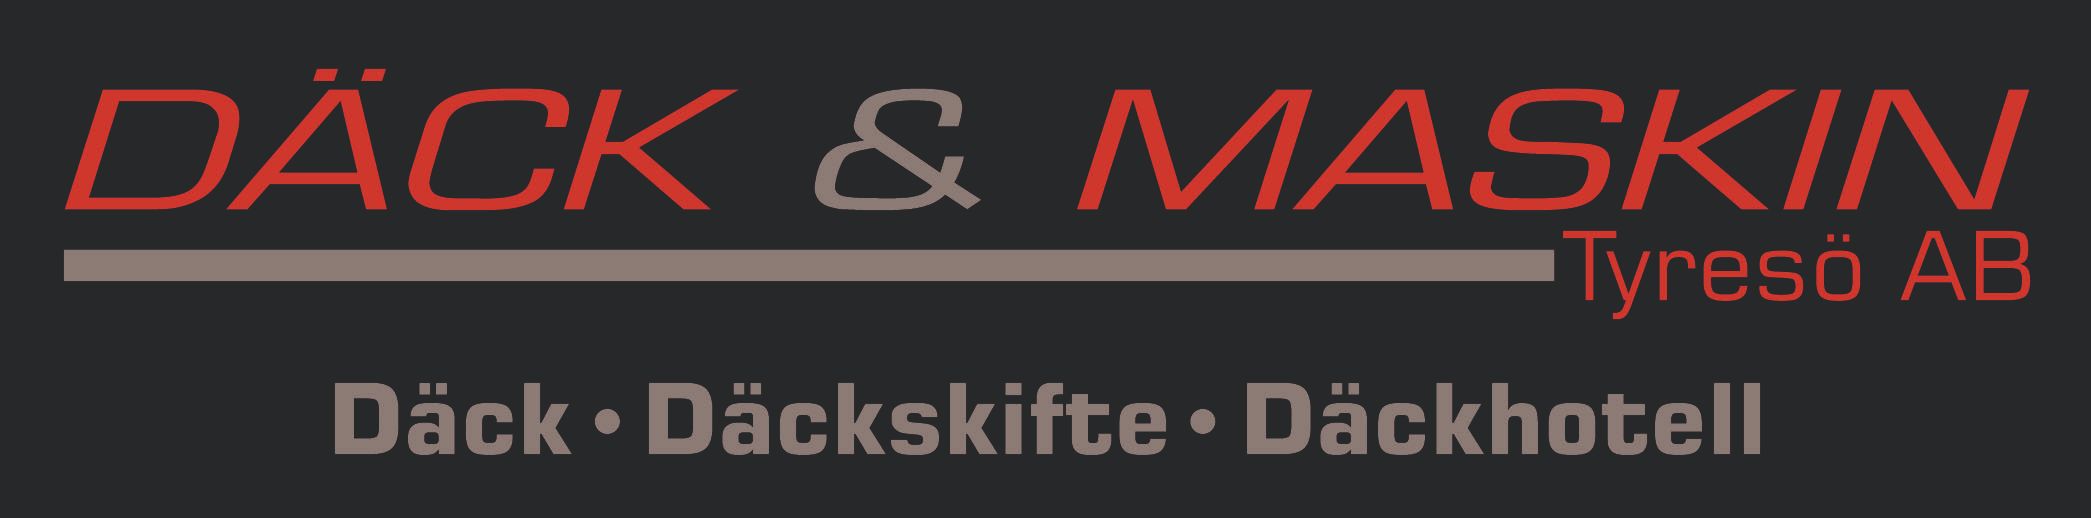 Däck & Maskin Tyresö AB logotyp